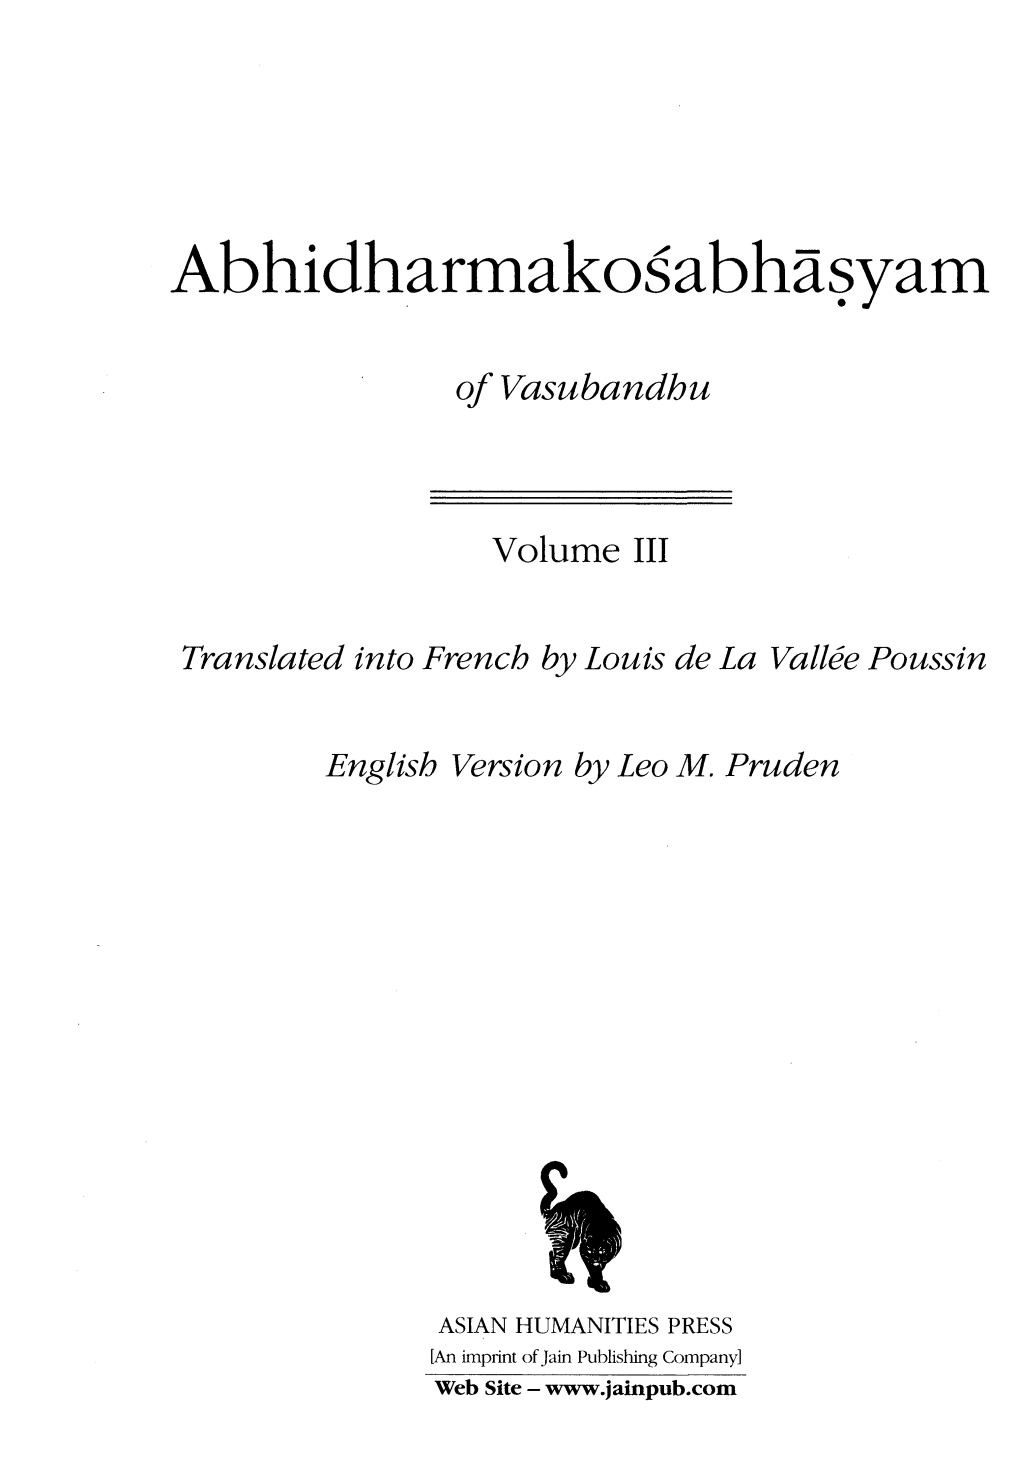 Abhidharmakosabhasyam, Volume